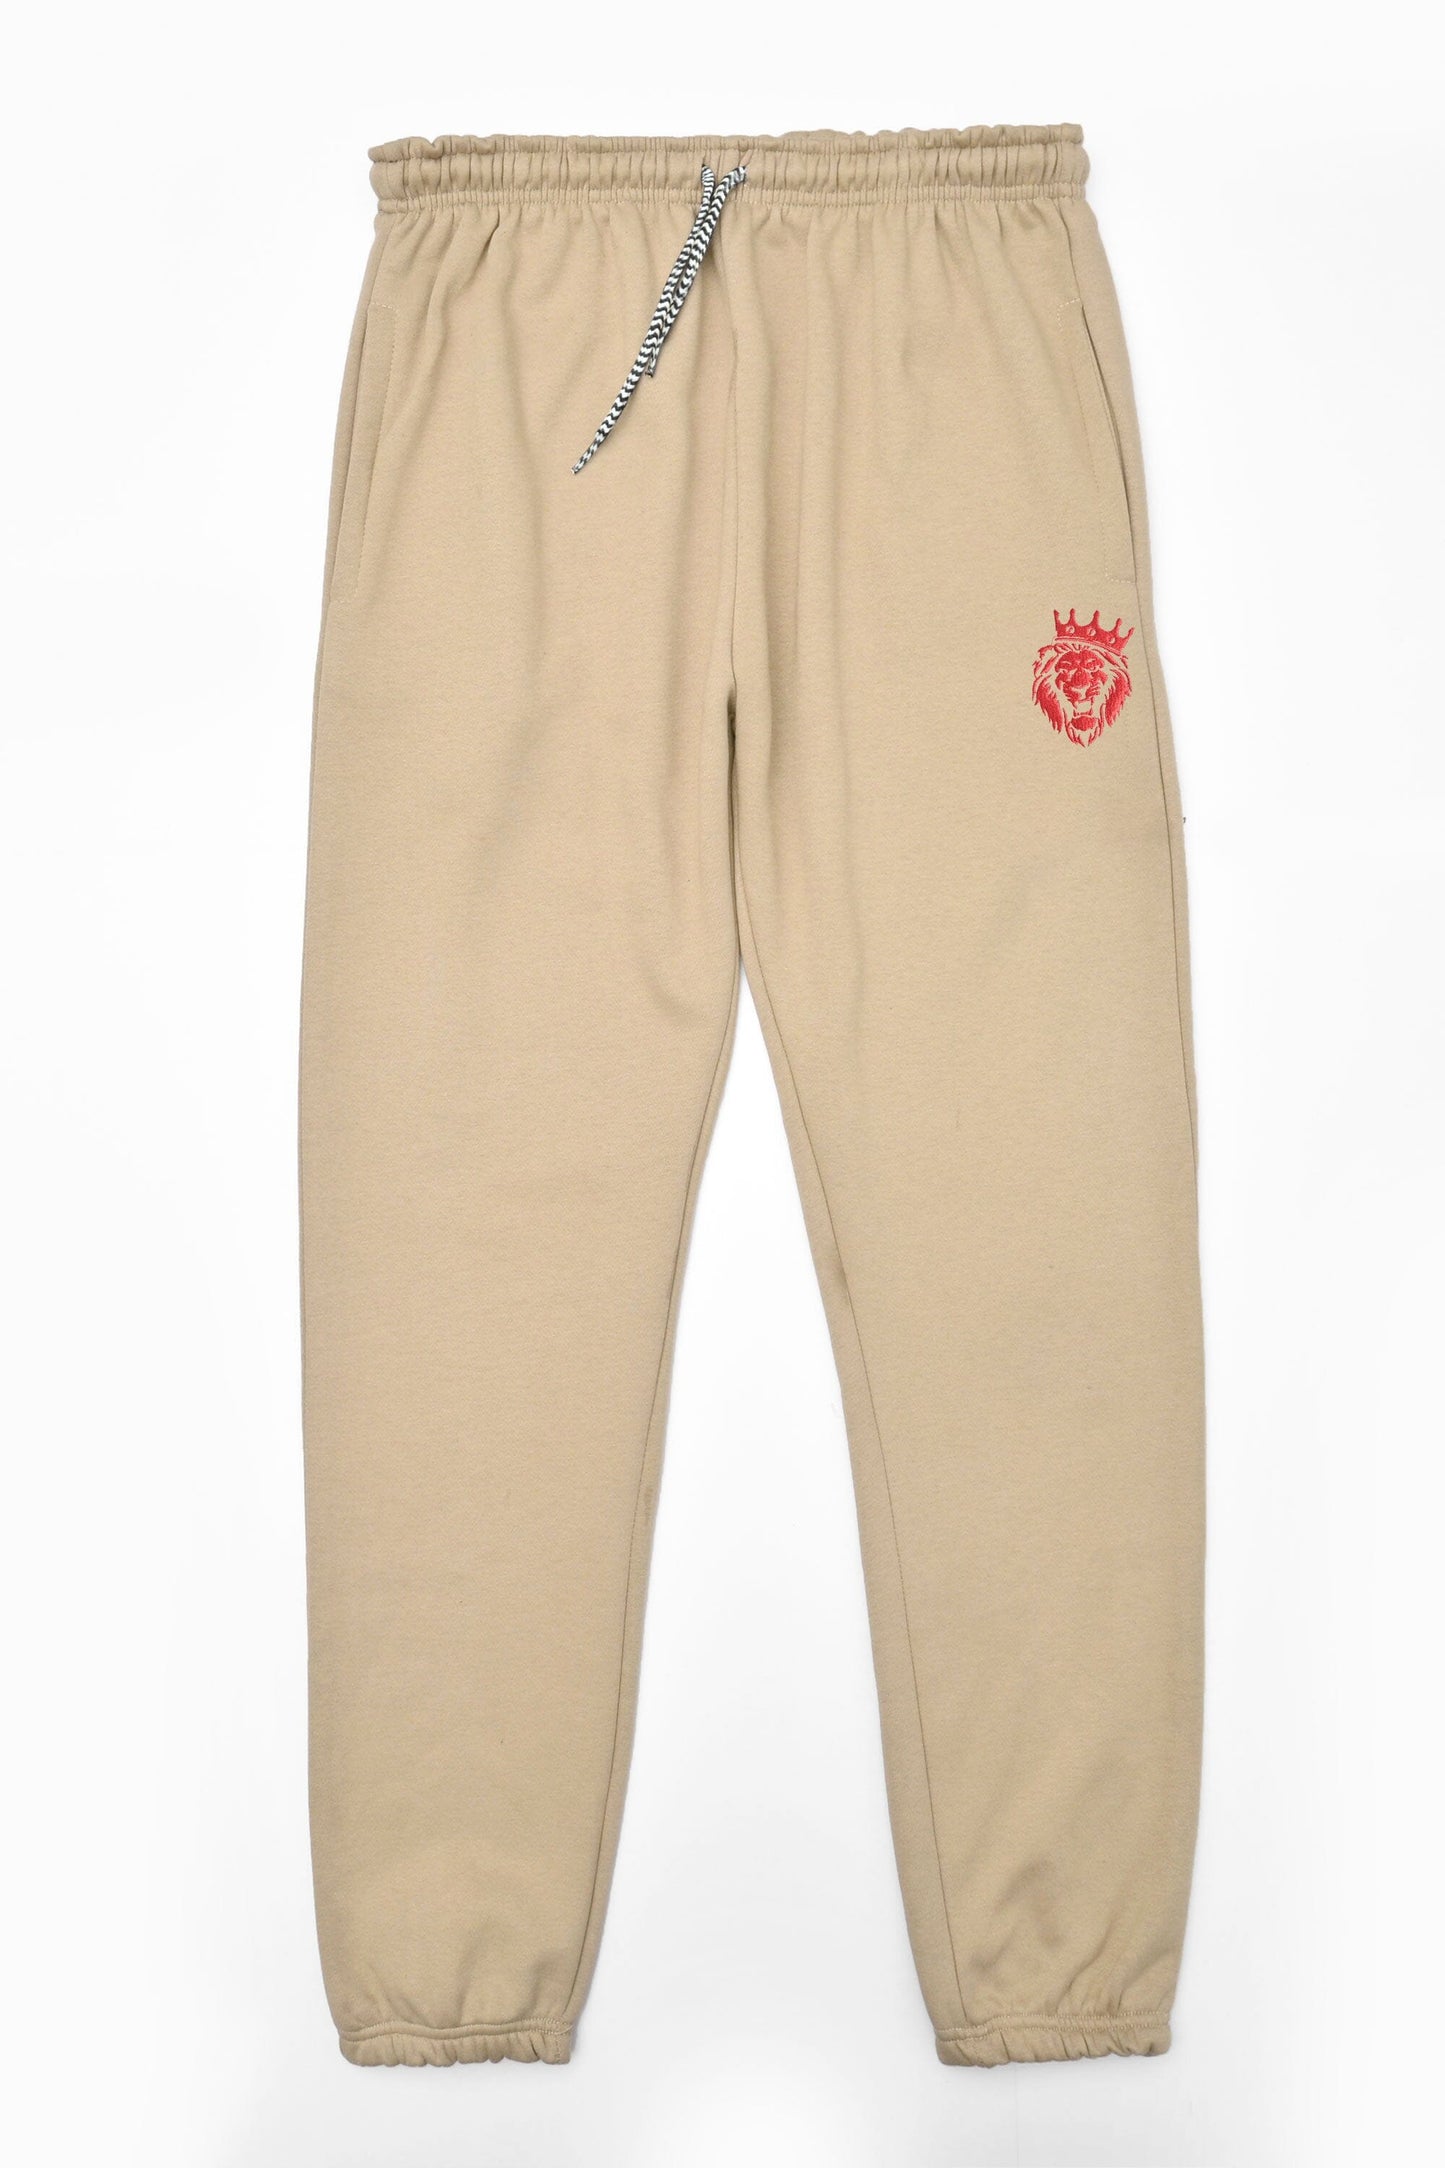 MAX 21 Men's Tiger Embroidered Fleece Joggers Pants Men's Trousers SZK 